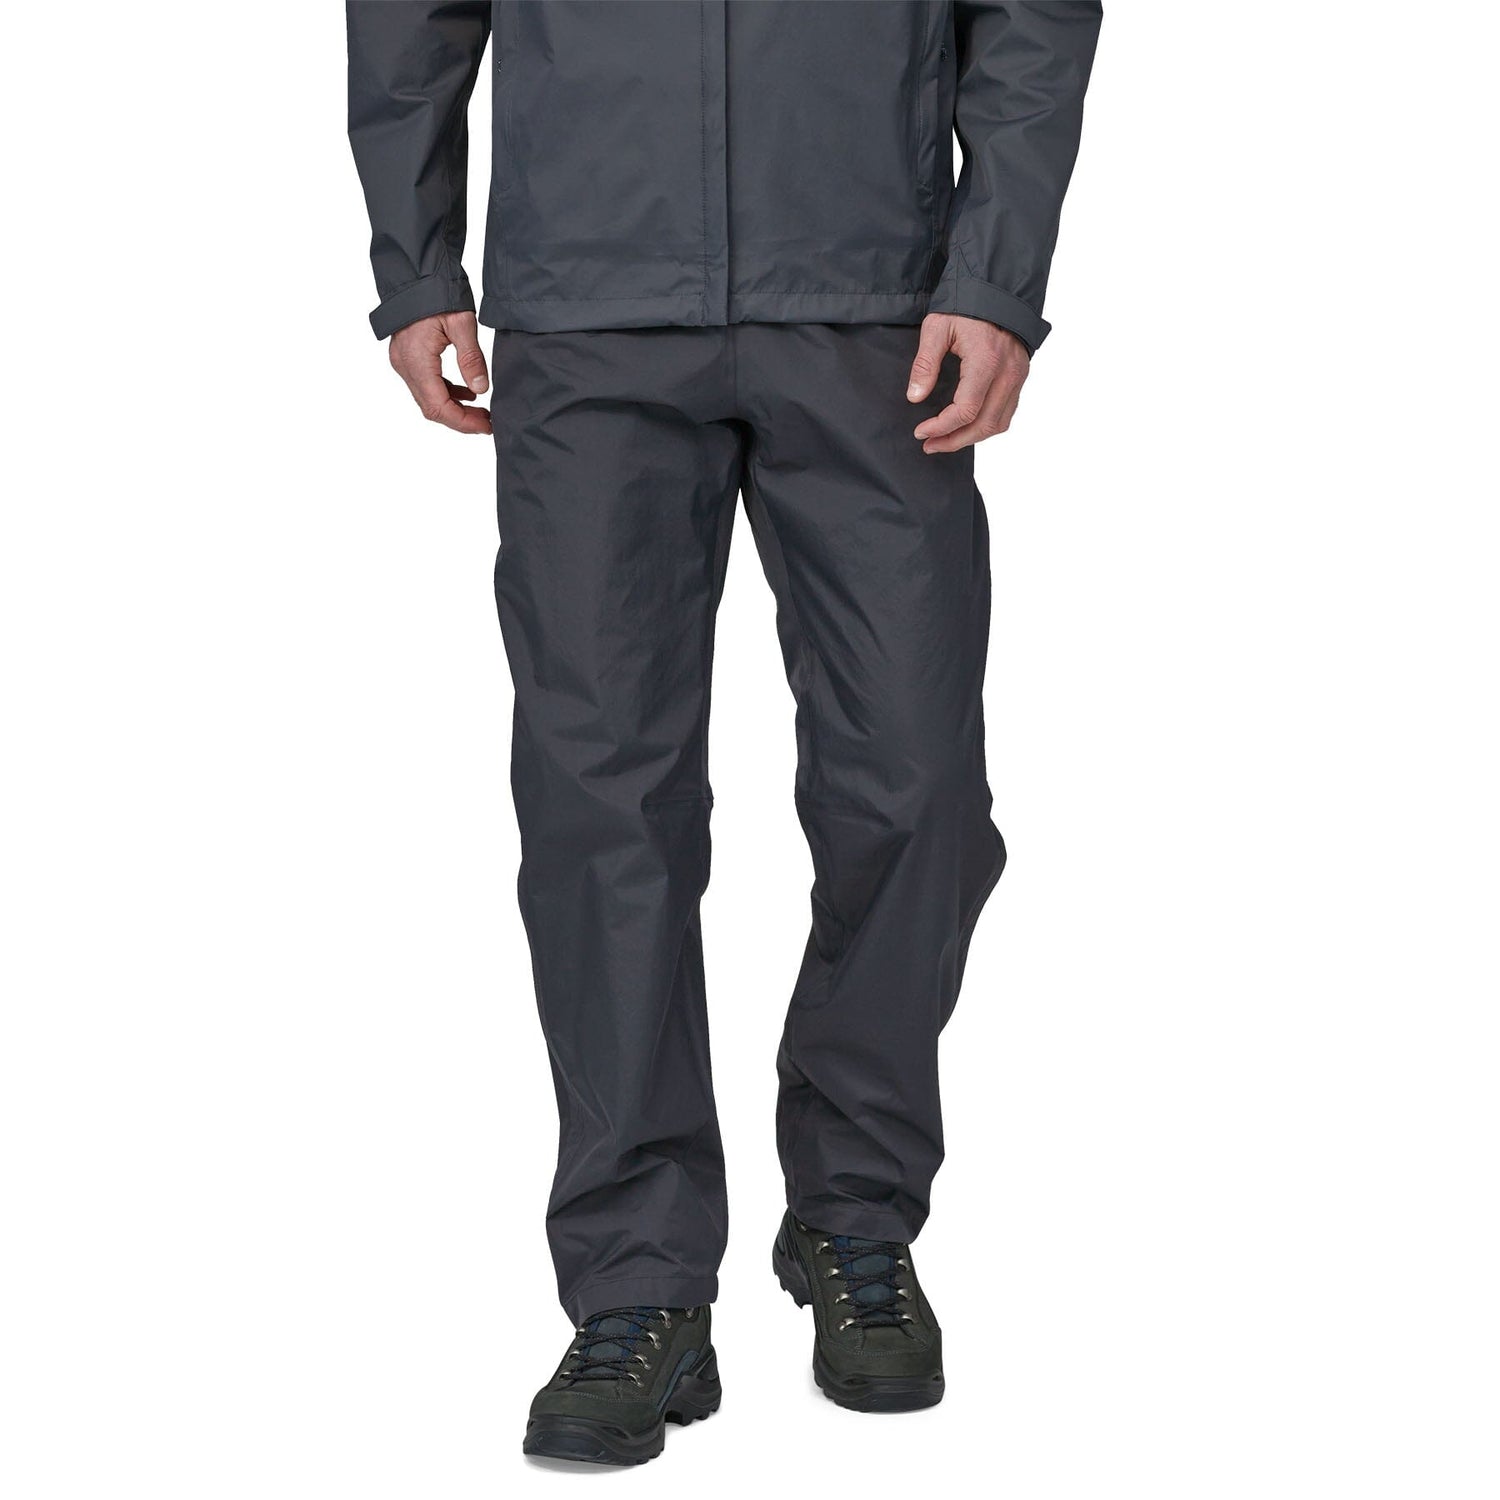 Patagonia - M's Torrentshell 3L Rain Pants - Recycled Nylon - Weekendbee - sustainable sportswear